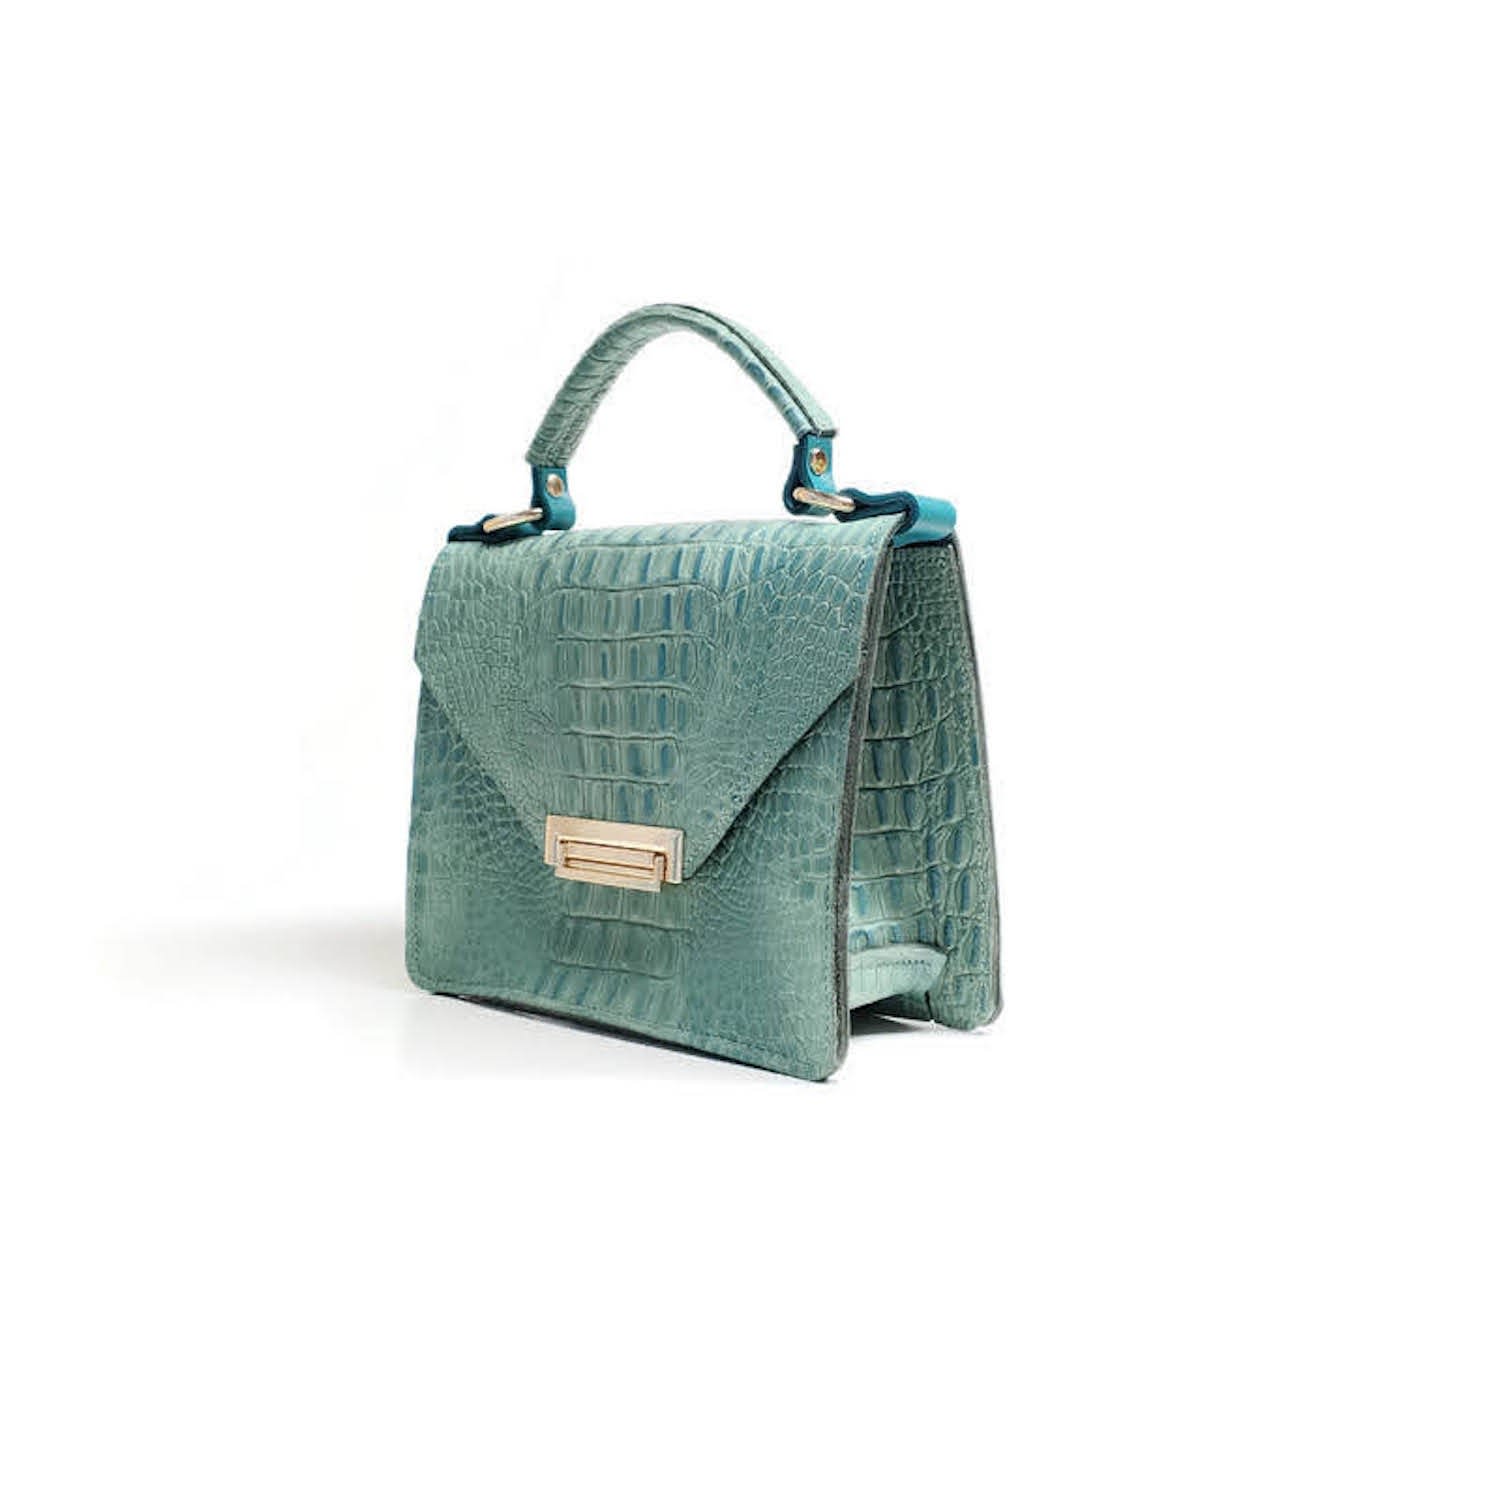 Angela Valentine Handbags - Gavi Mini Bag In Sea Green Crocodile Embossed Leather